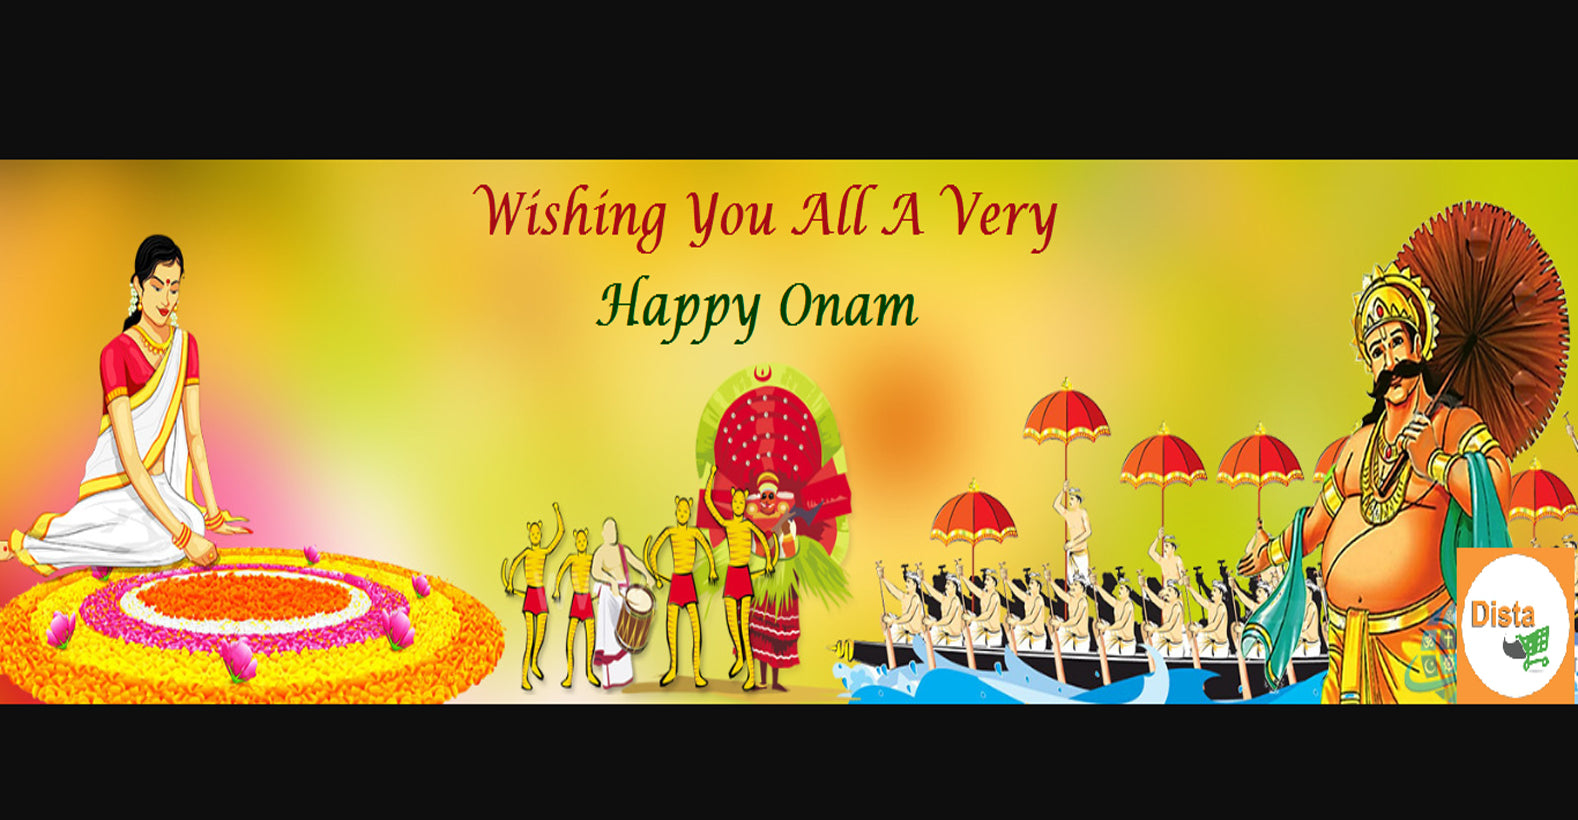 Onam Festival – Grand Celebration of Kerala Starts With Online Shoppin